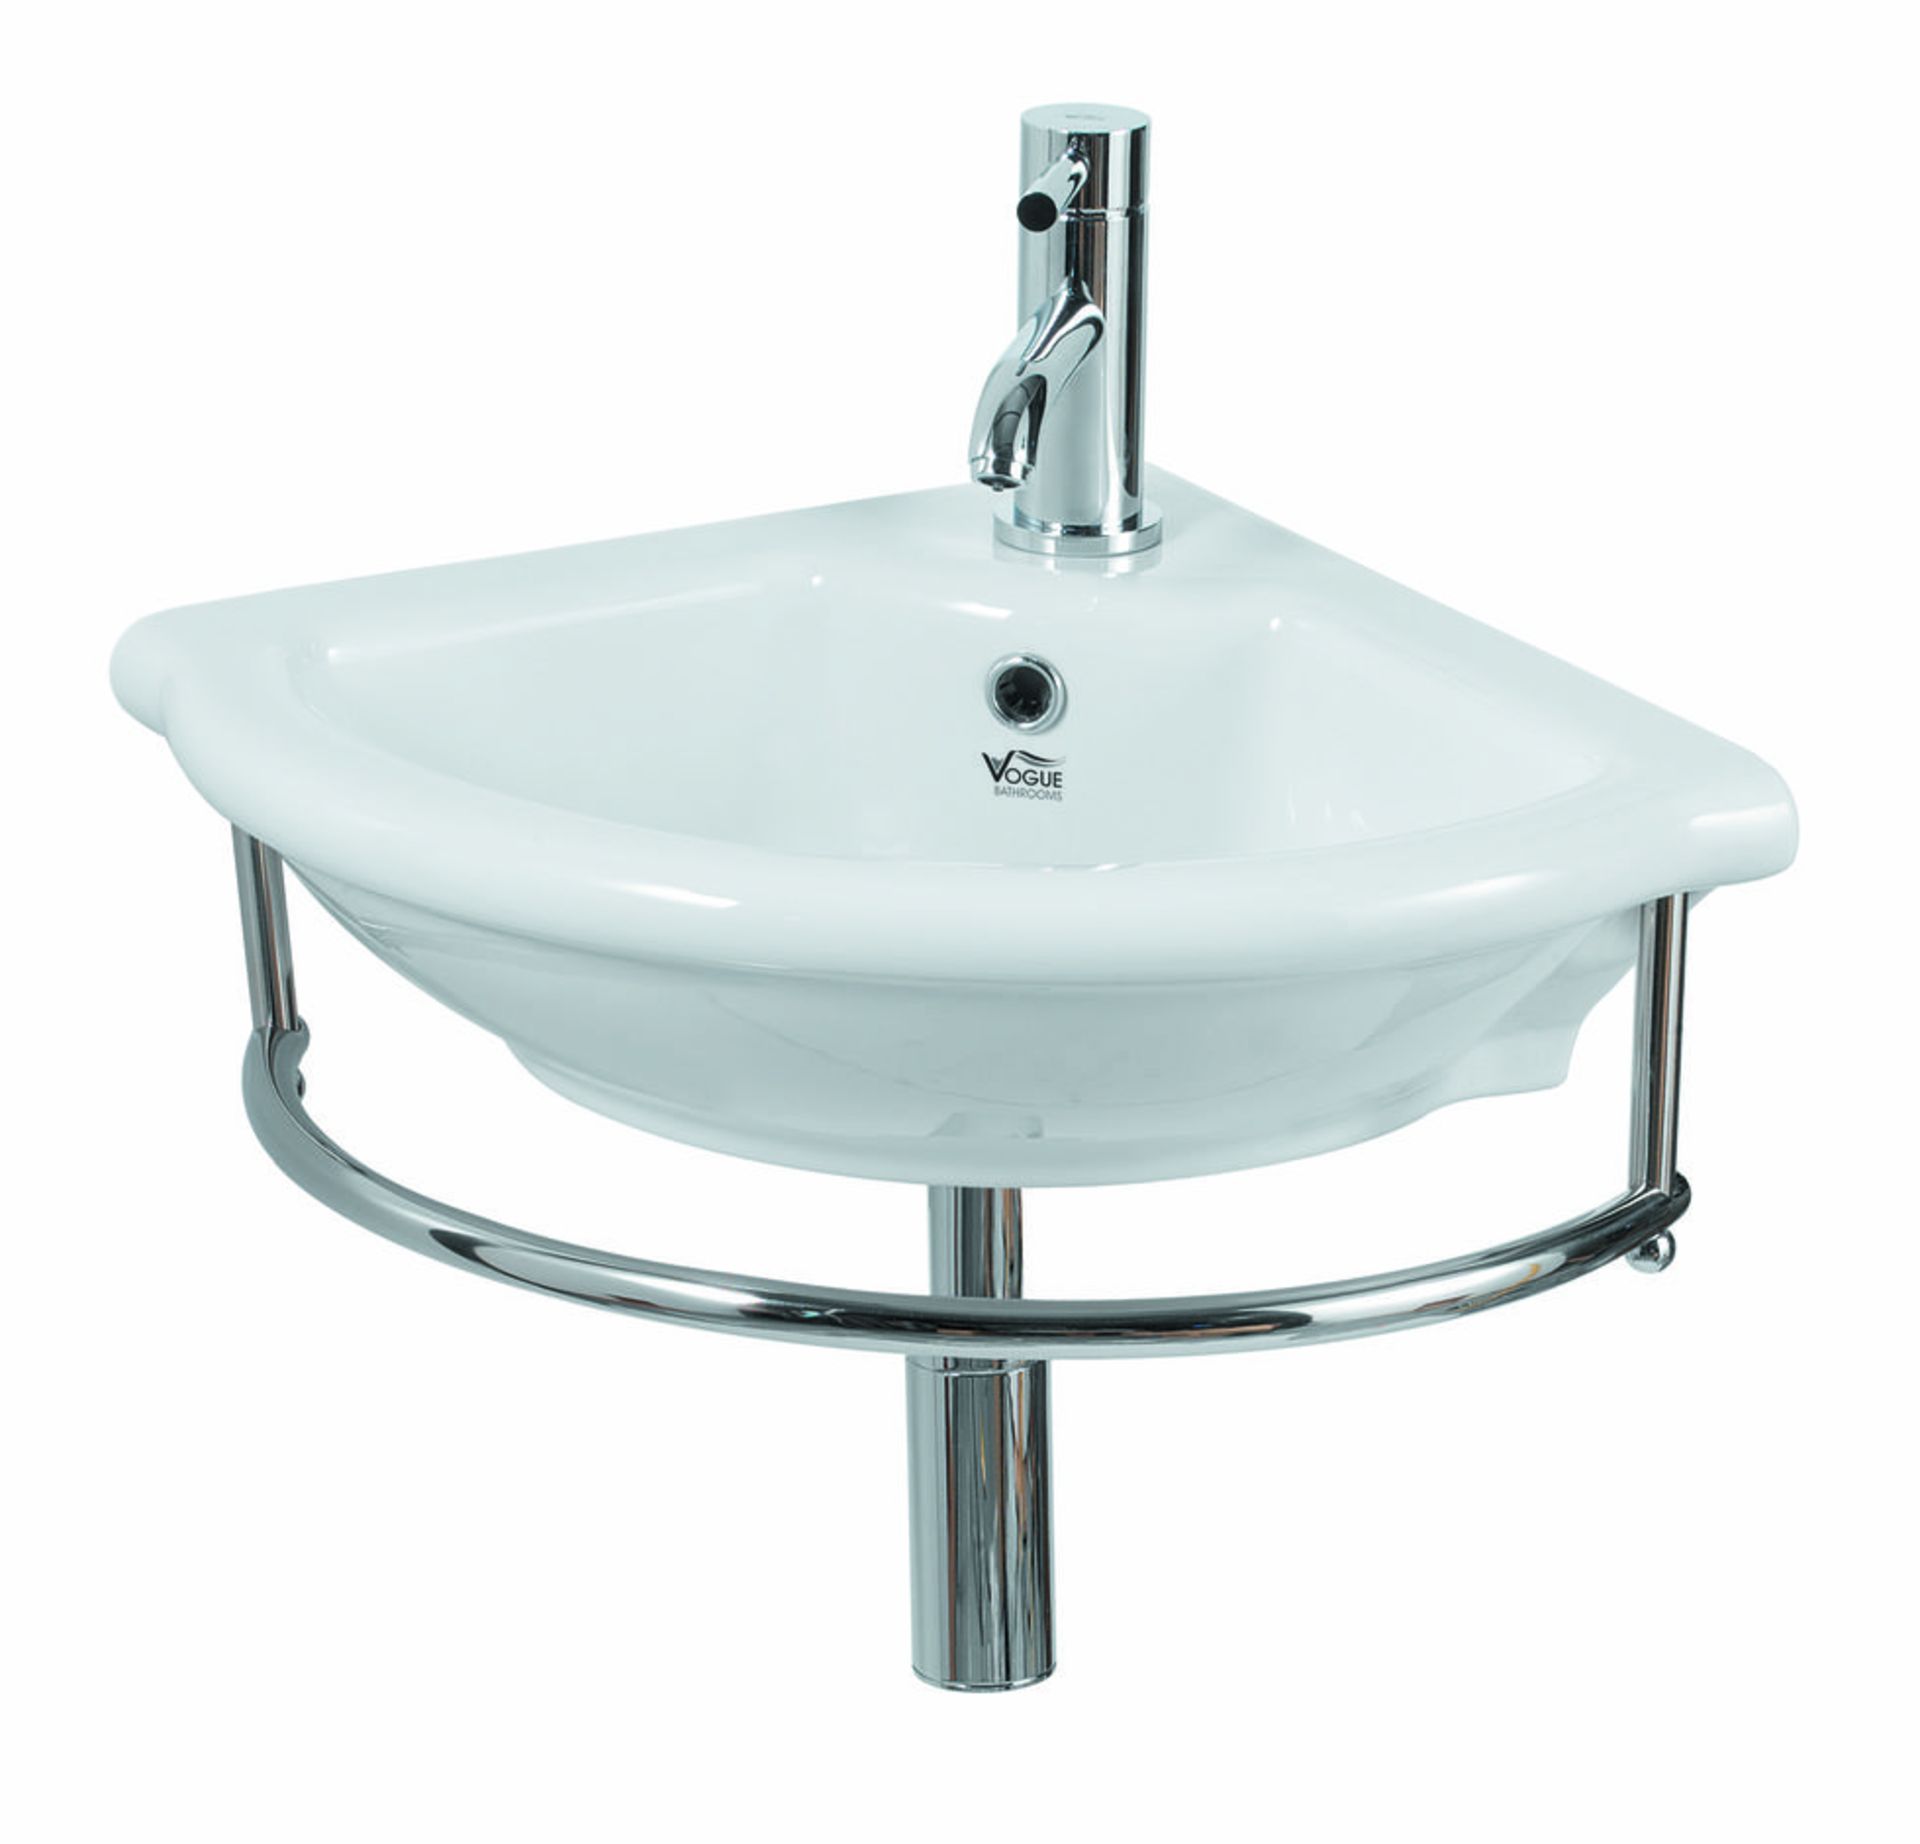 4 x Vogue Ormos 50cm 1 Tap Hole Corner Sink Basins With Chrome Towel Rails - Modern Wall Mounted